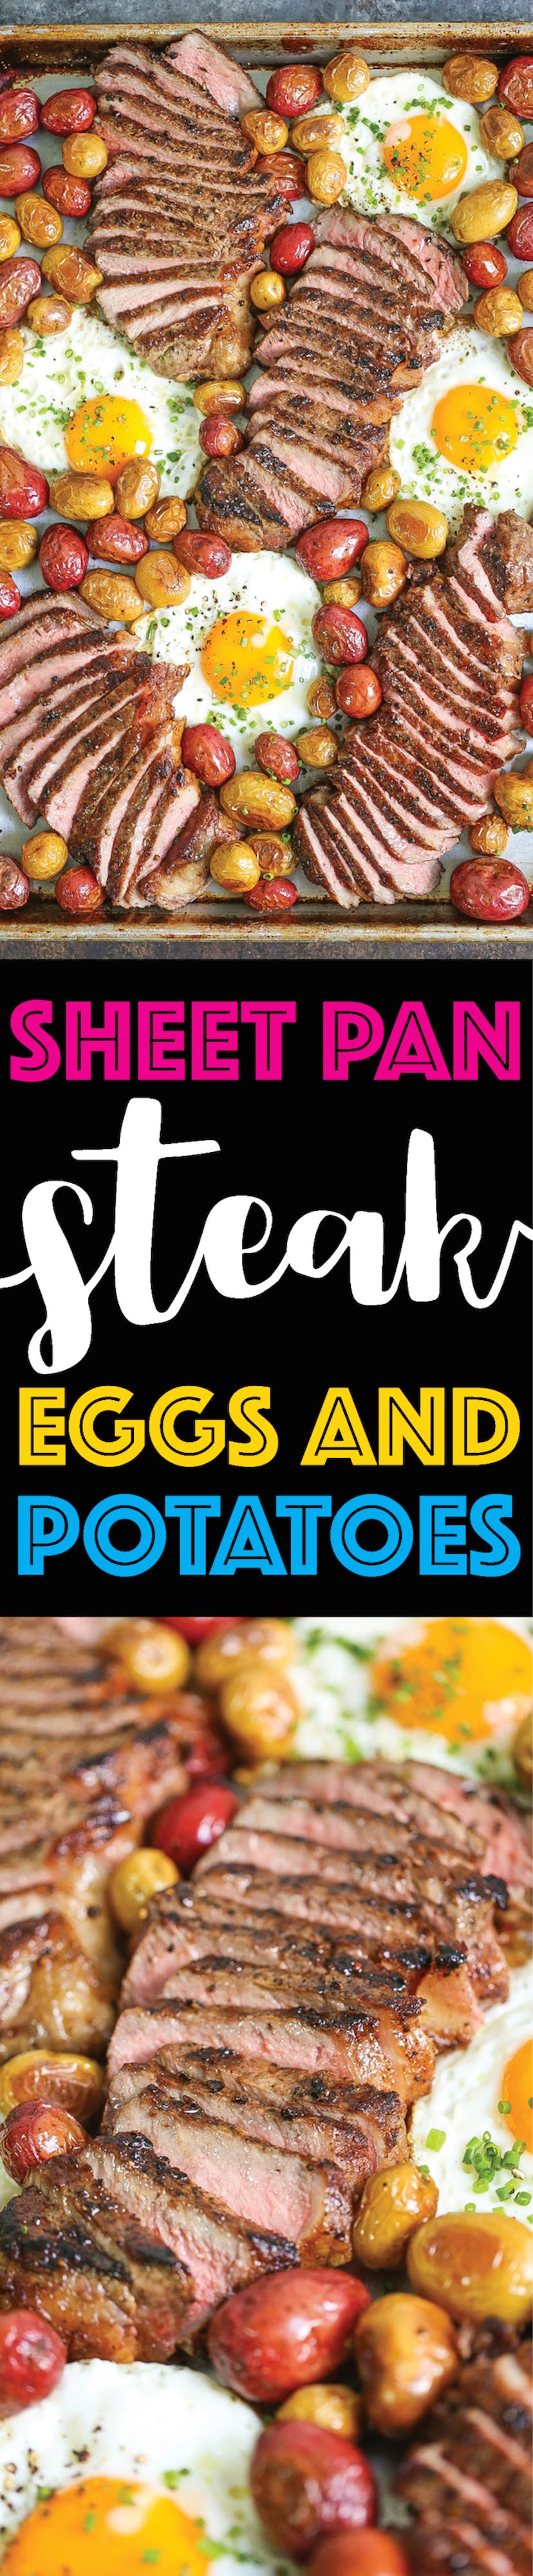 sheet pan recipes with steak, sheet pan steak eggs and potatoes